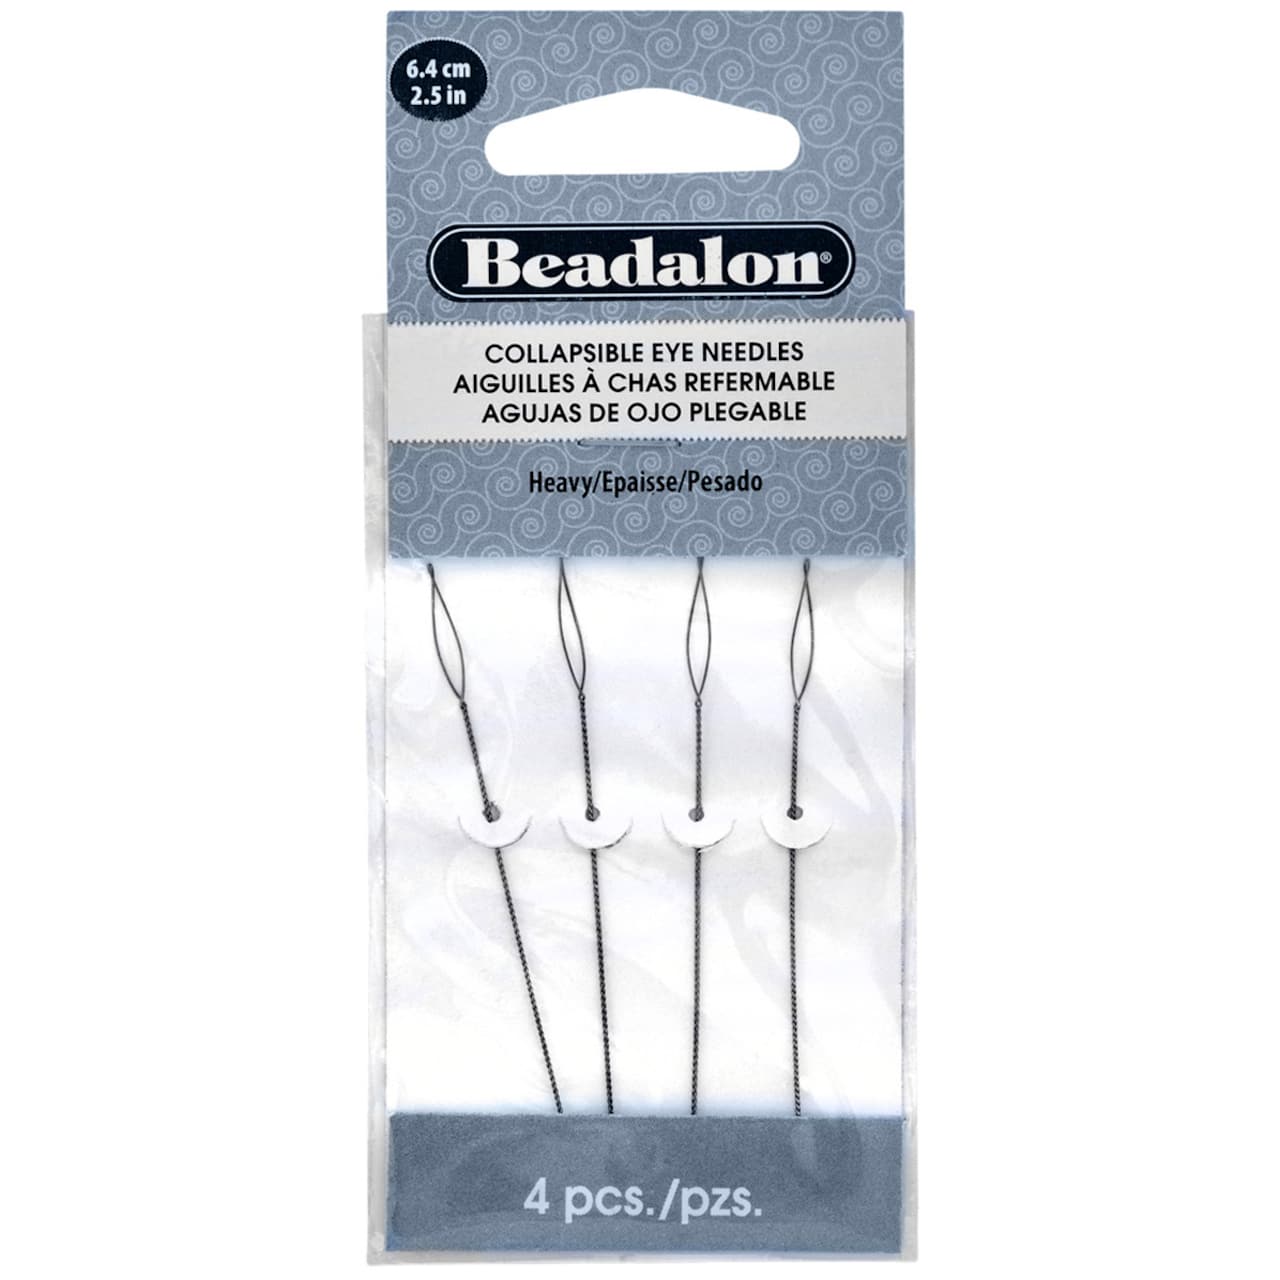 Beadalon&#xAE; Collapsible Eye Needles, Heavy